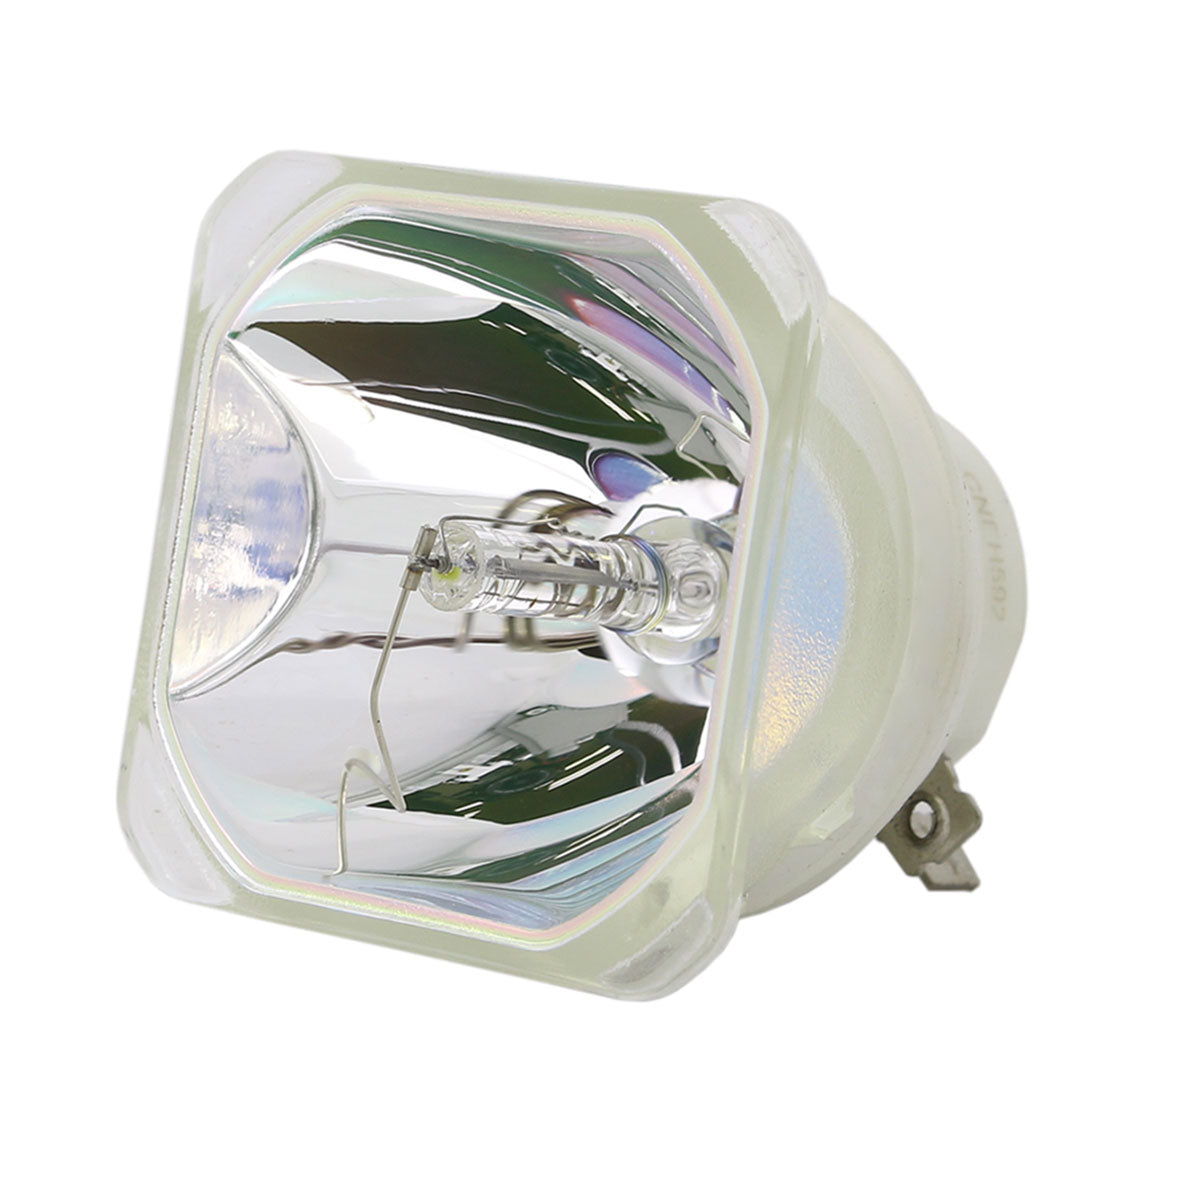 Planar 997-5268-00 Ushio Projector Bare Lamp